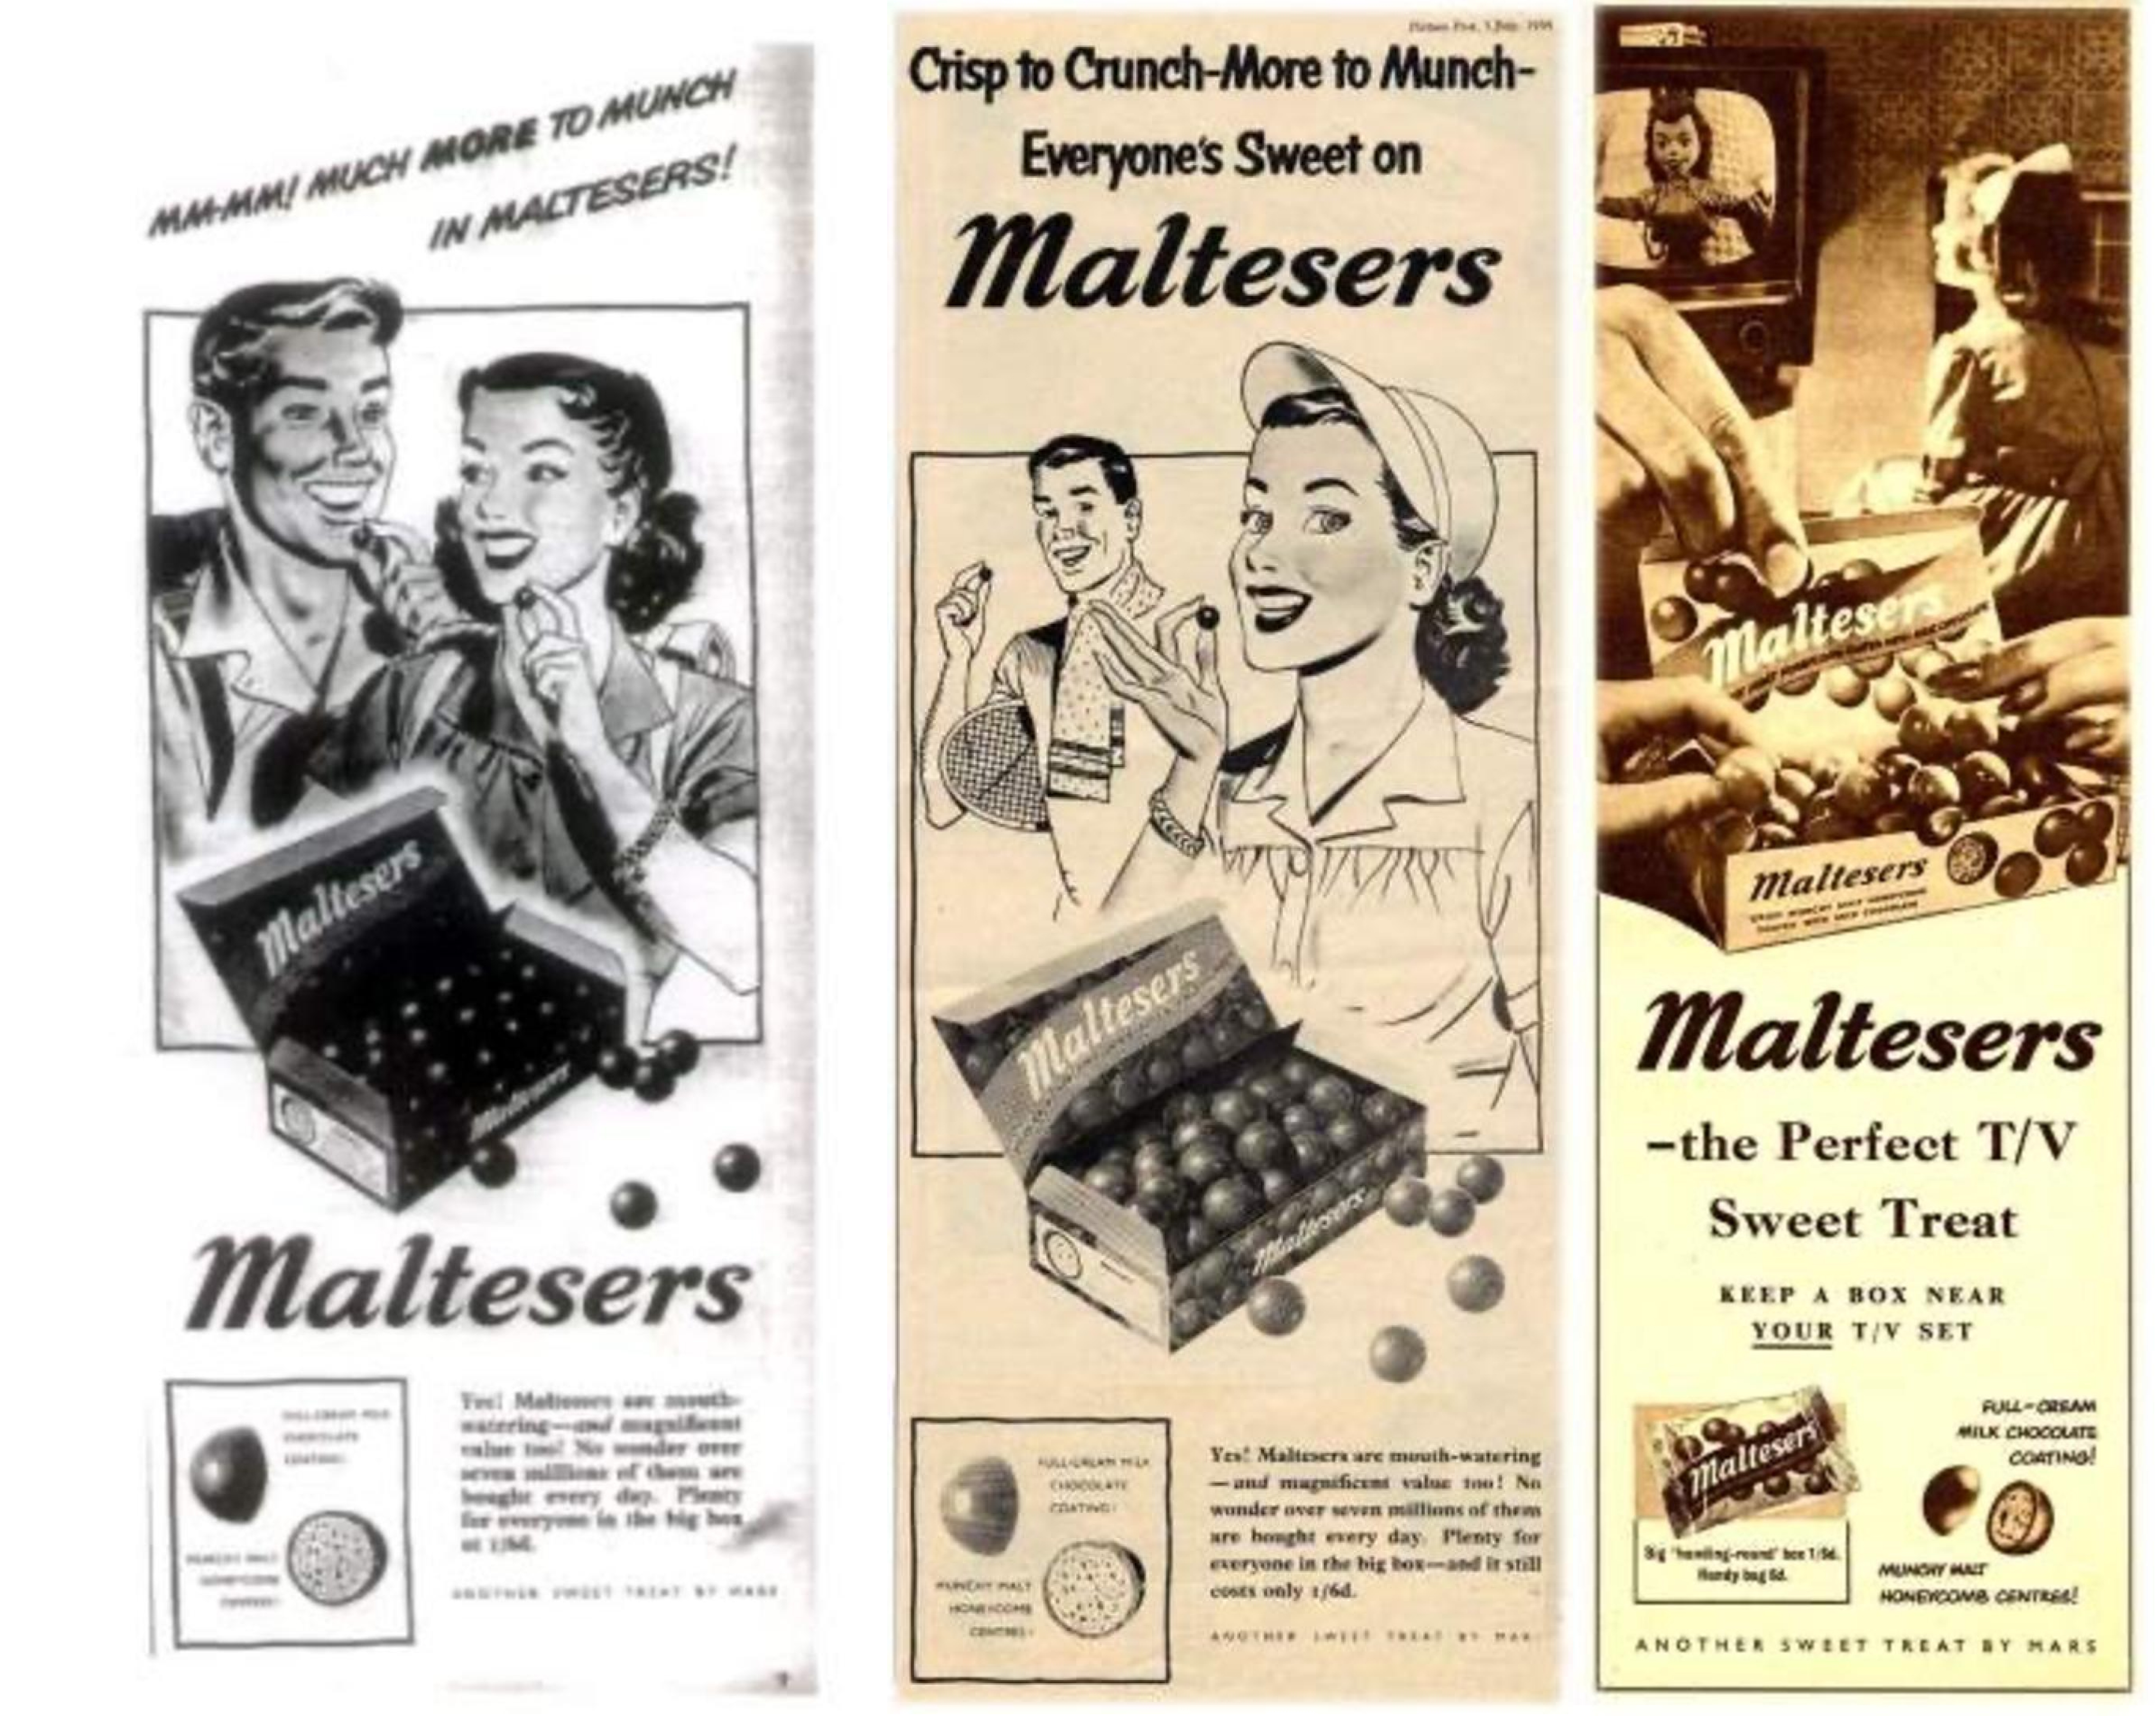 Image-1950s-maltesers